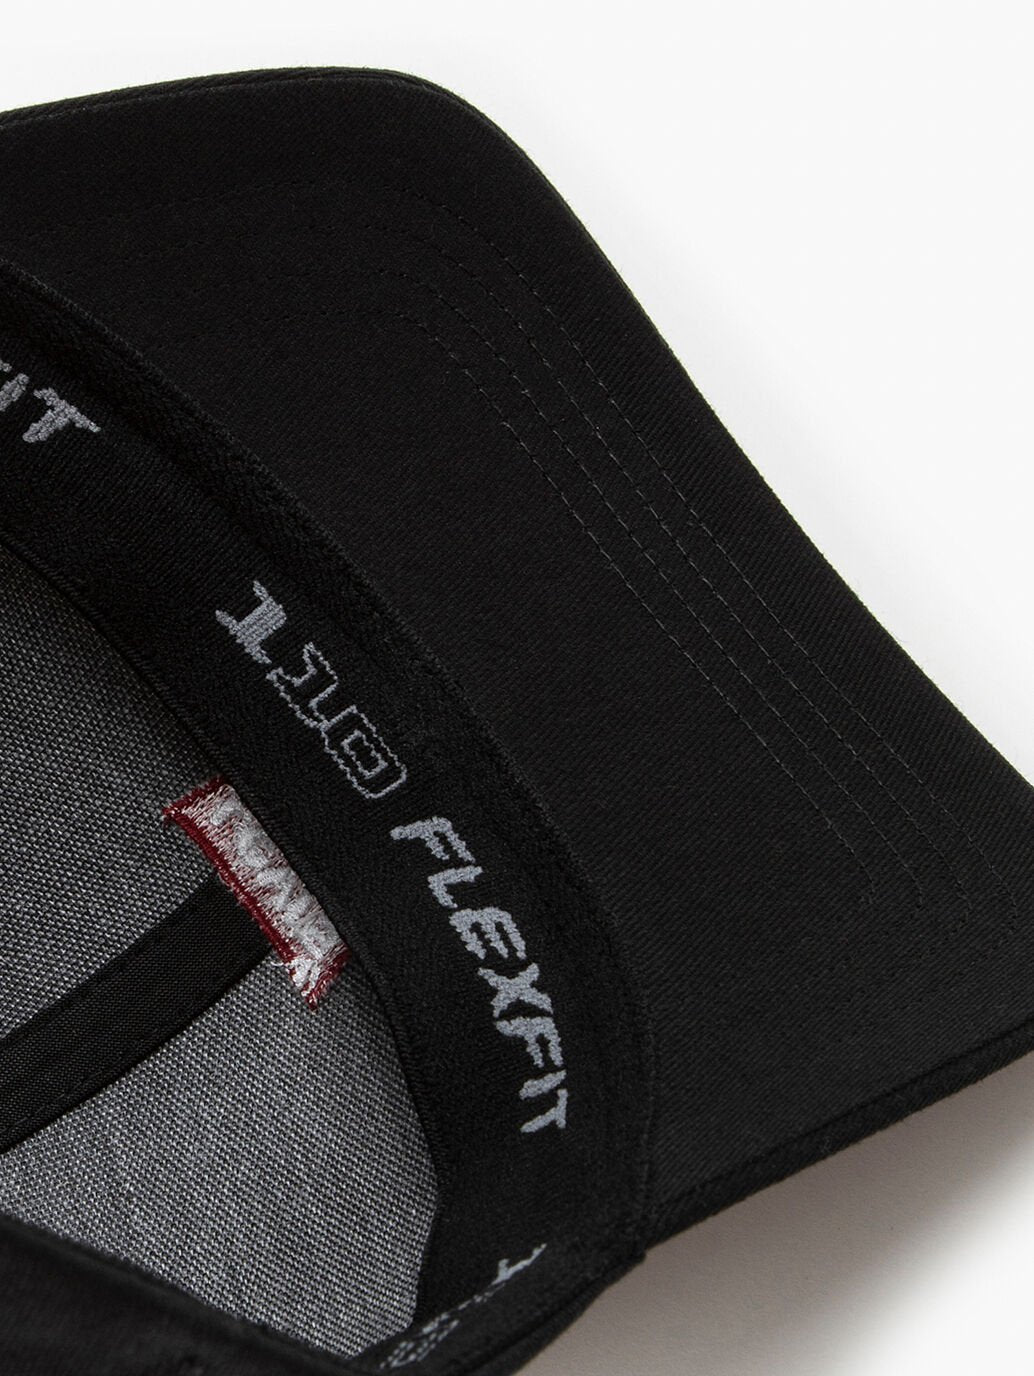 LEVIS // Housemark Flexfit Cap BLACK